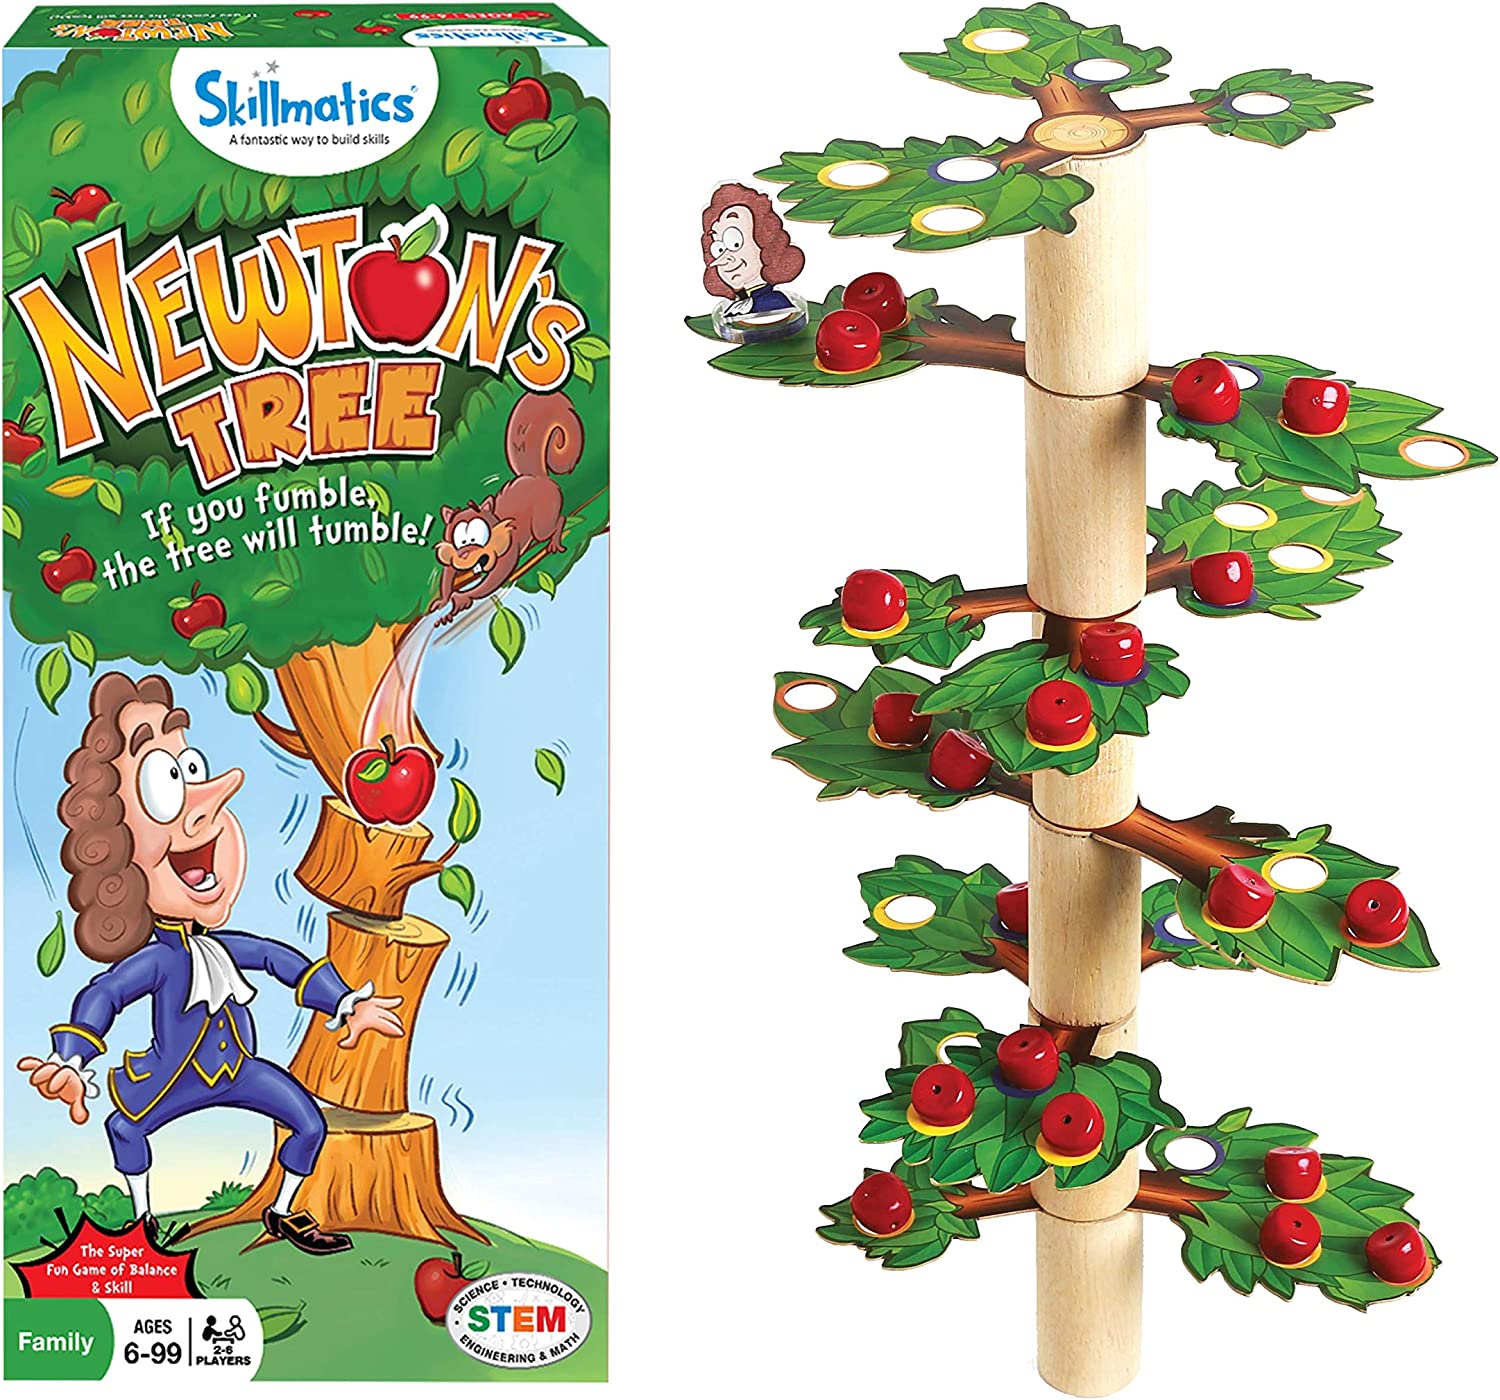 Newton’s Tree